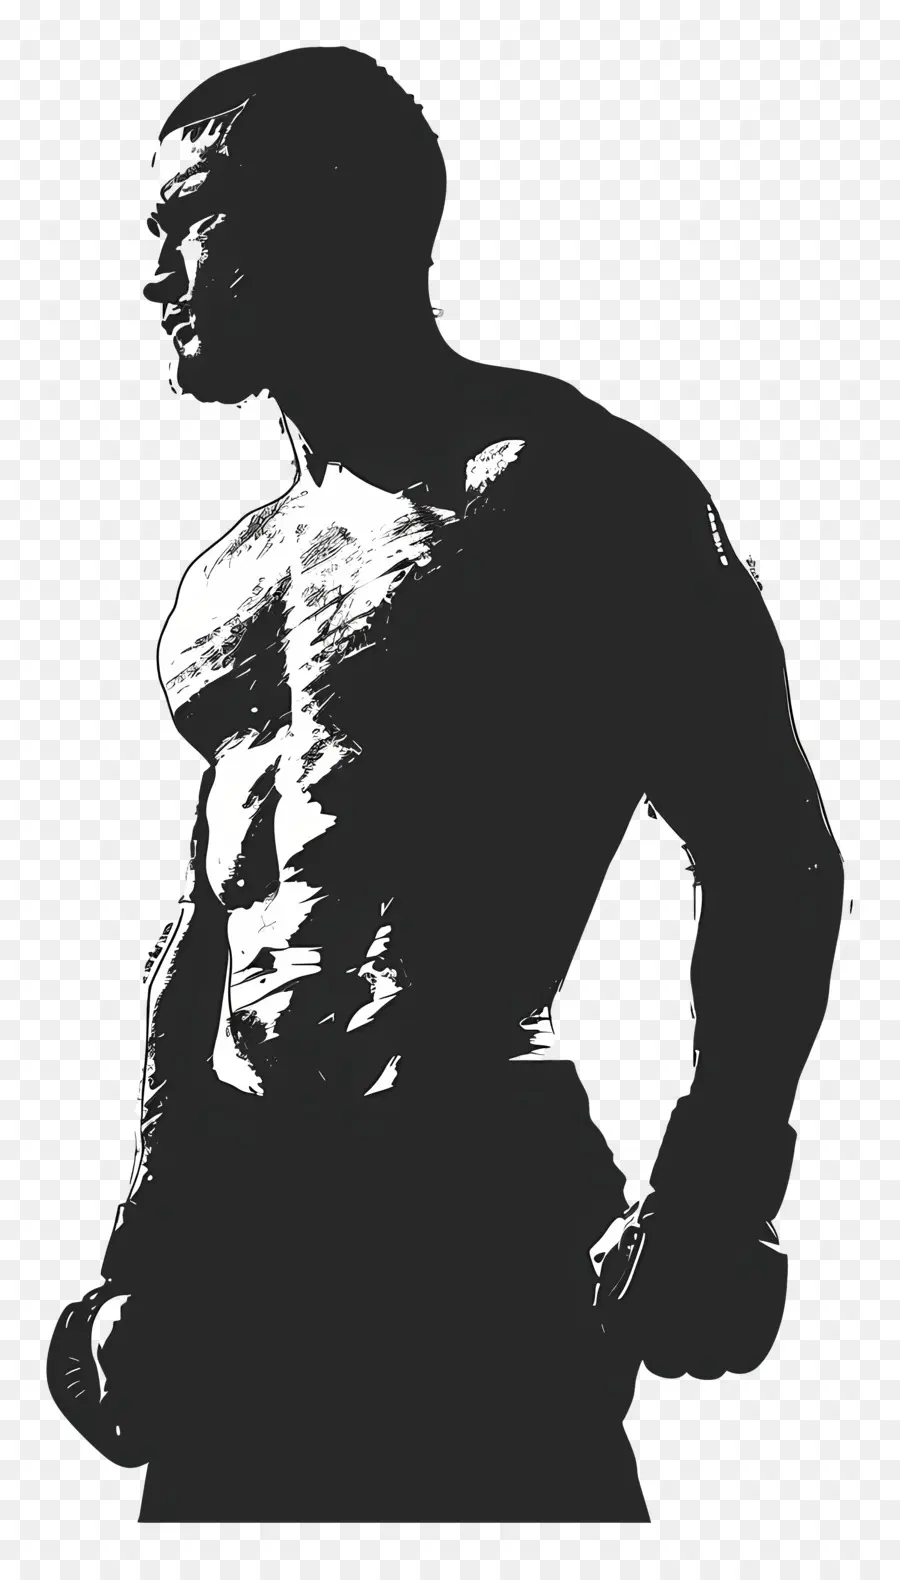 UFC Man Silhouette maschile maschile a maglietta nera silhouette - Silhouette of Man in Black Outfit